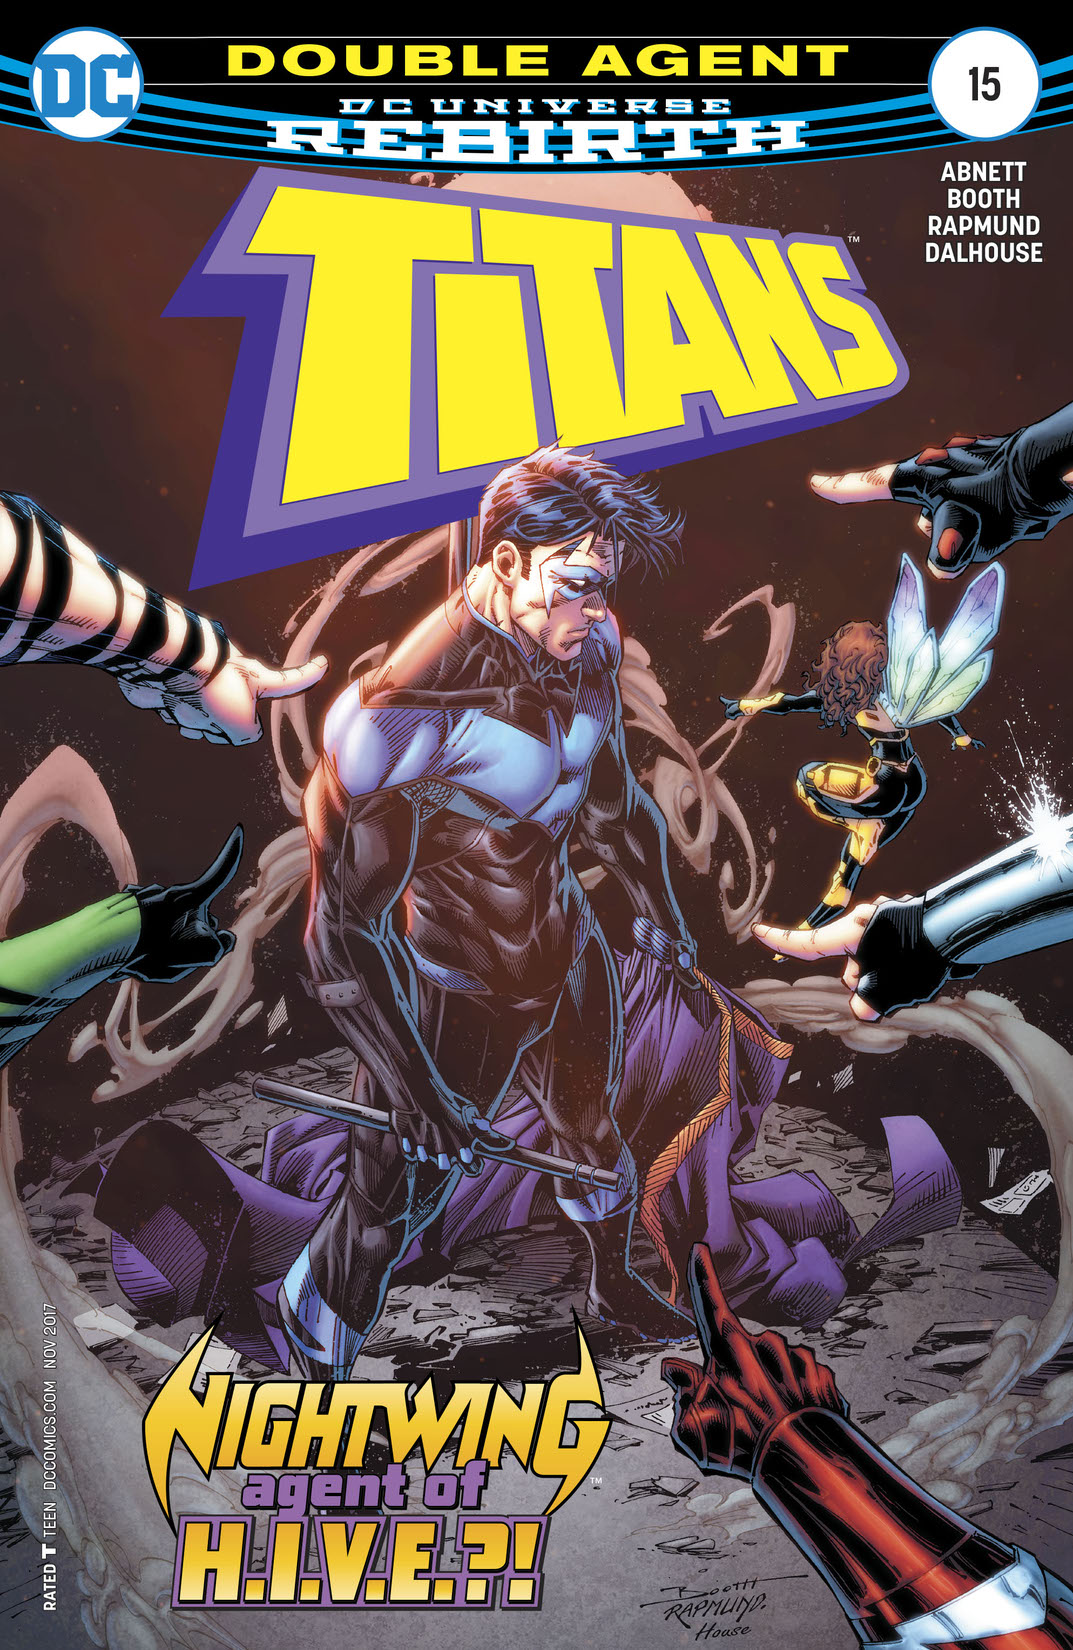 Titans (2016-) #15 preview images